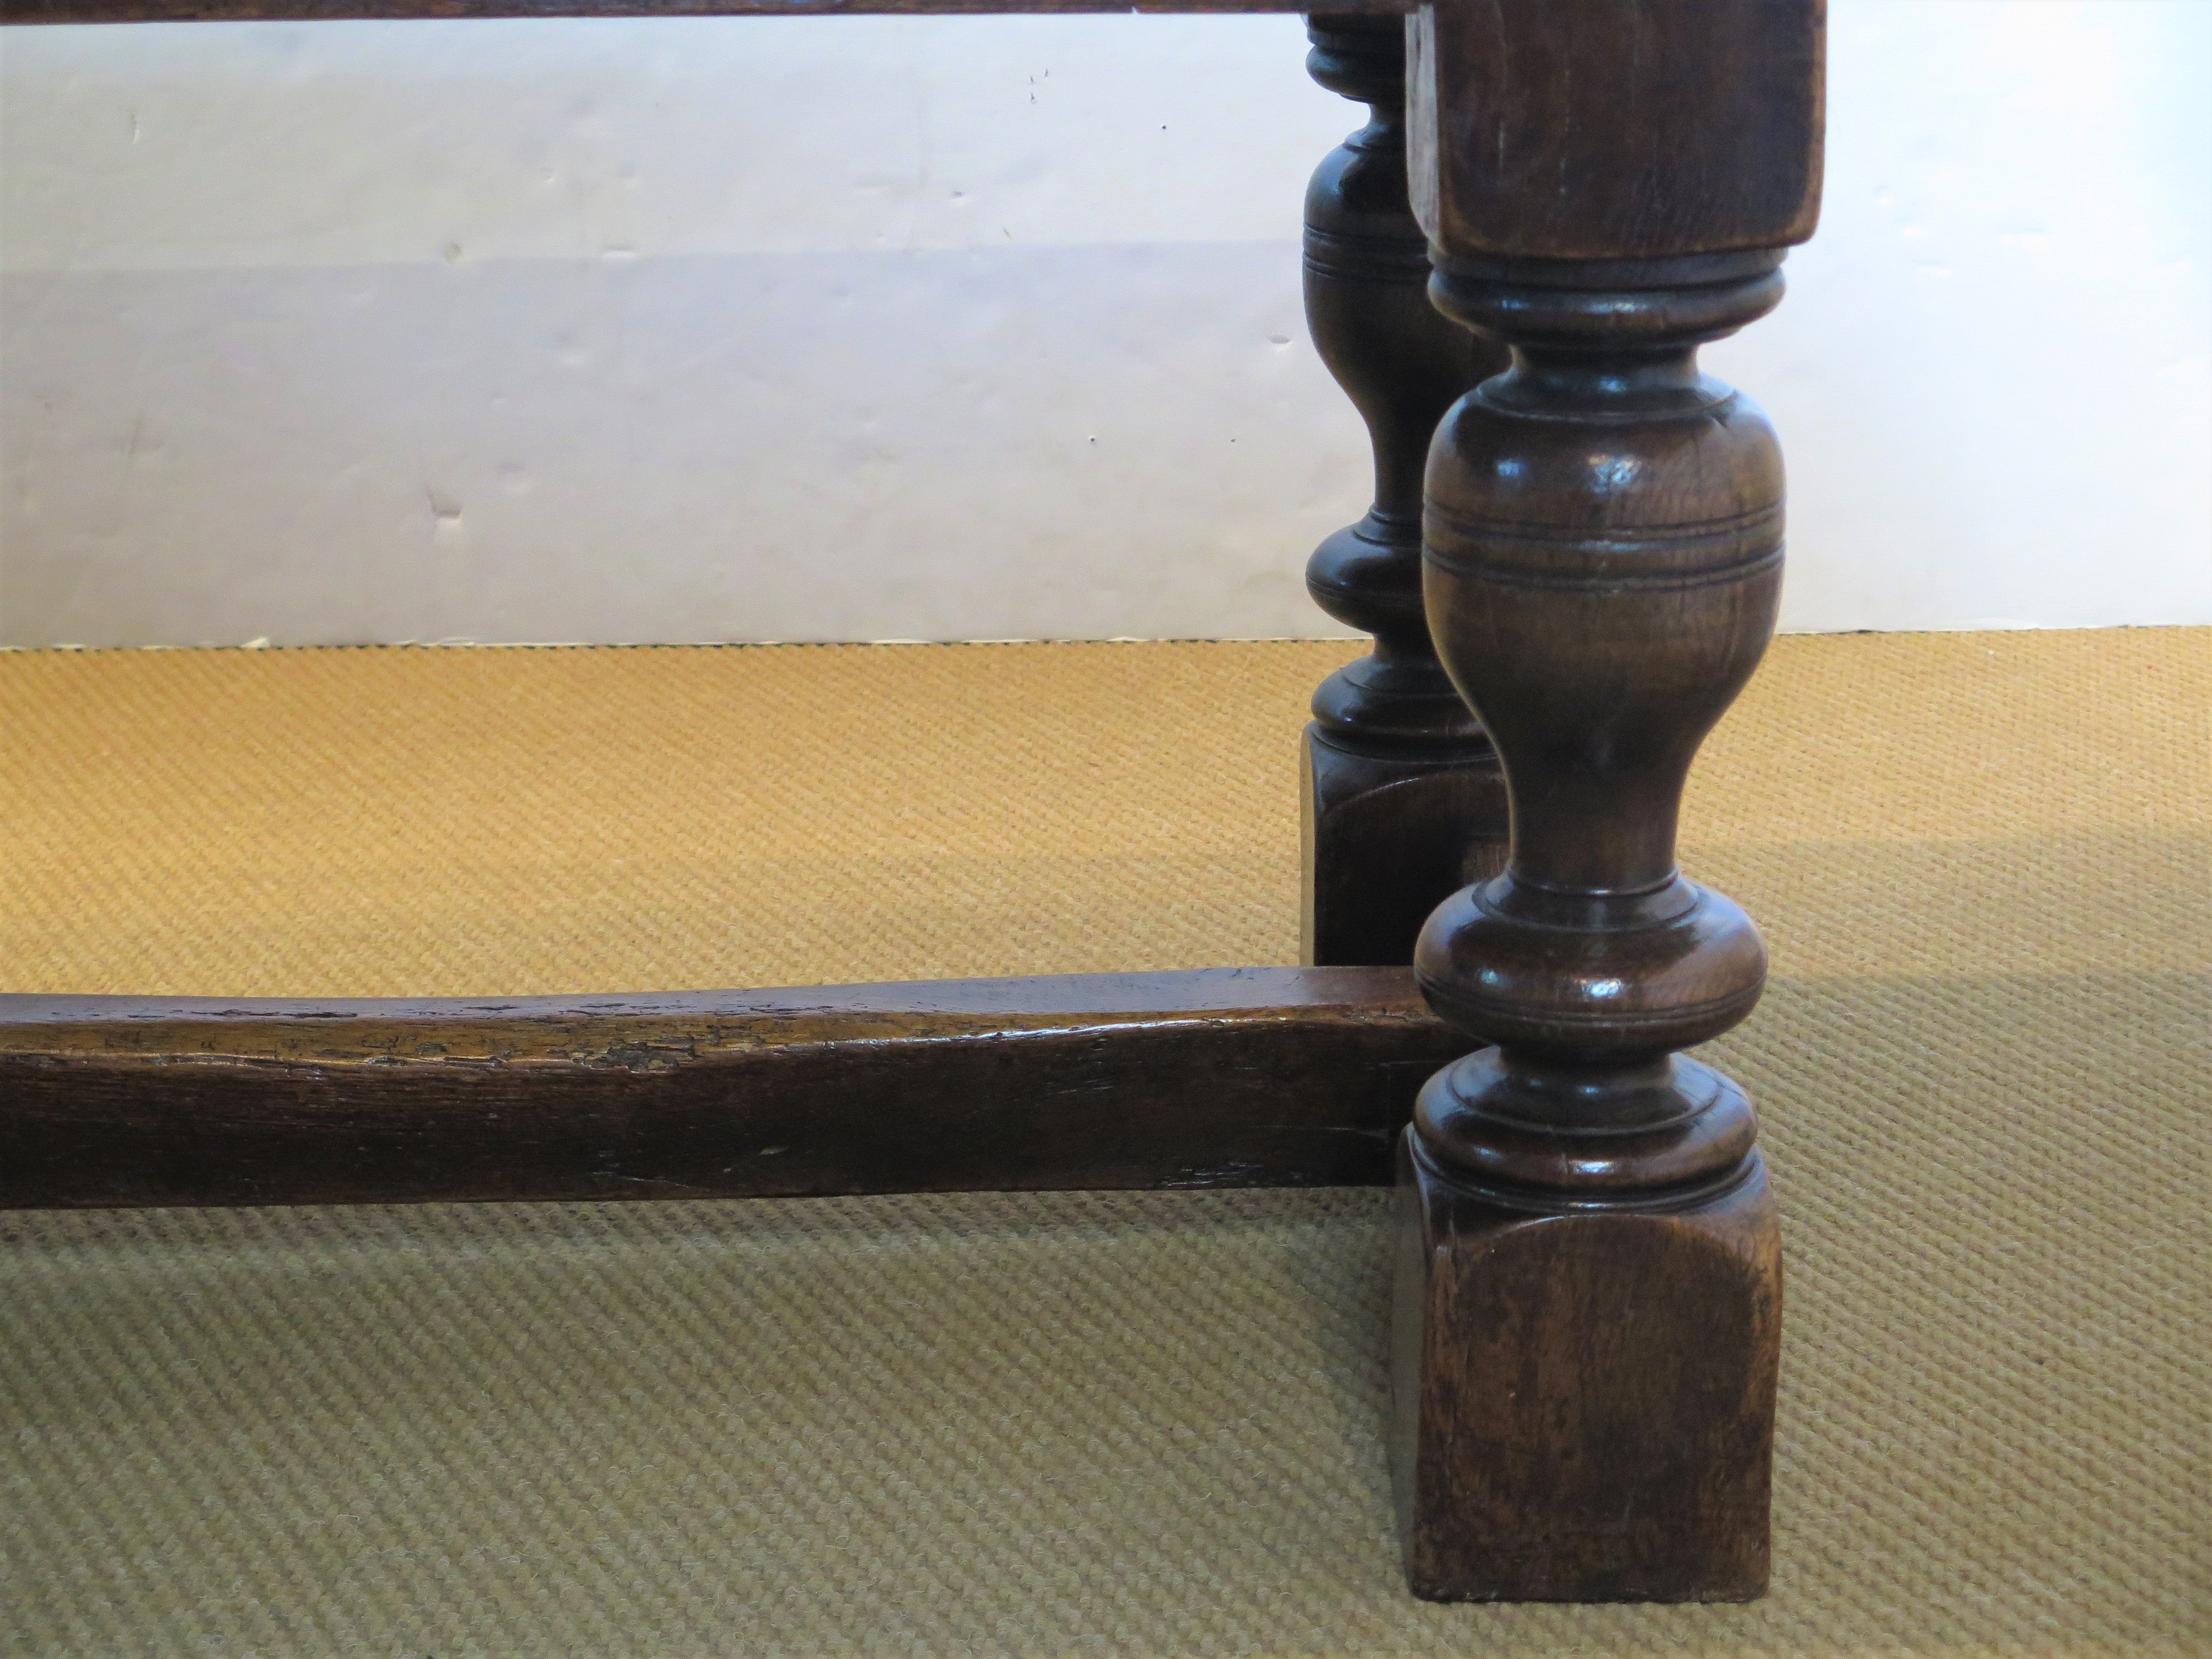 17th Century English Oak Refectory / Long Table